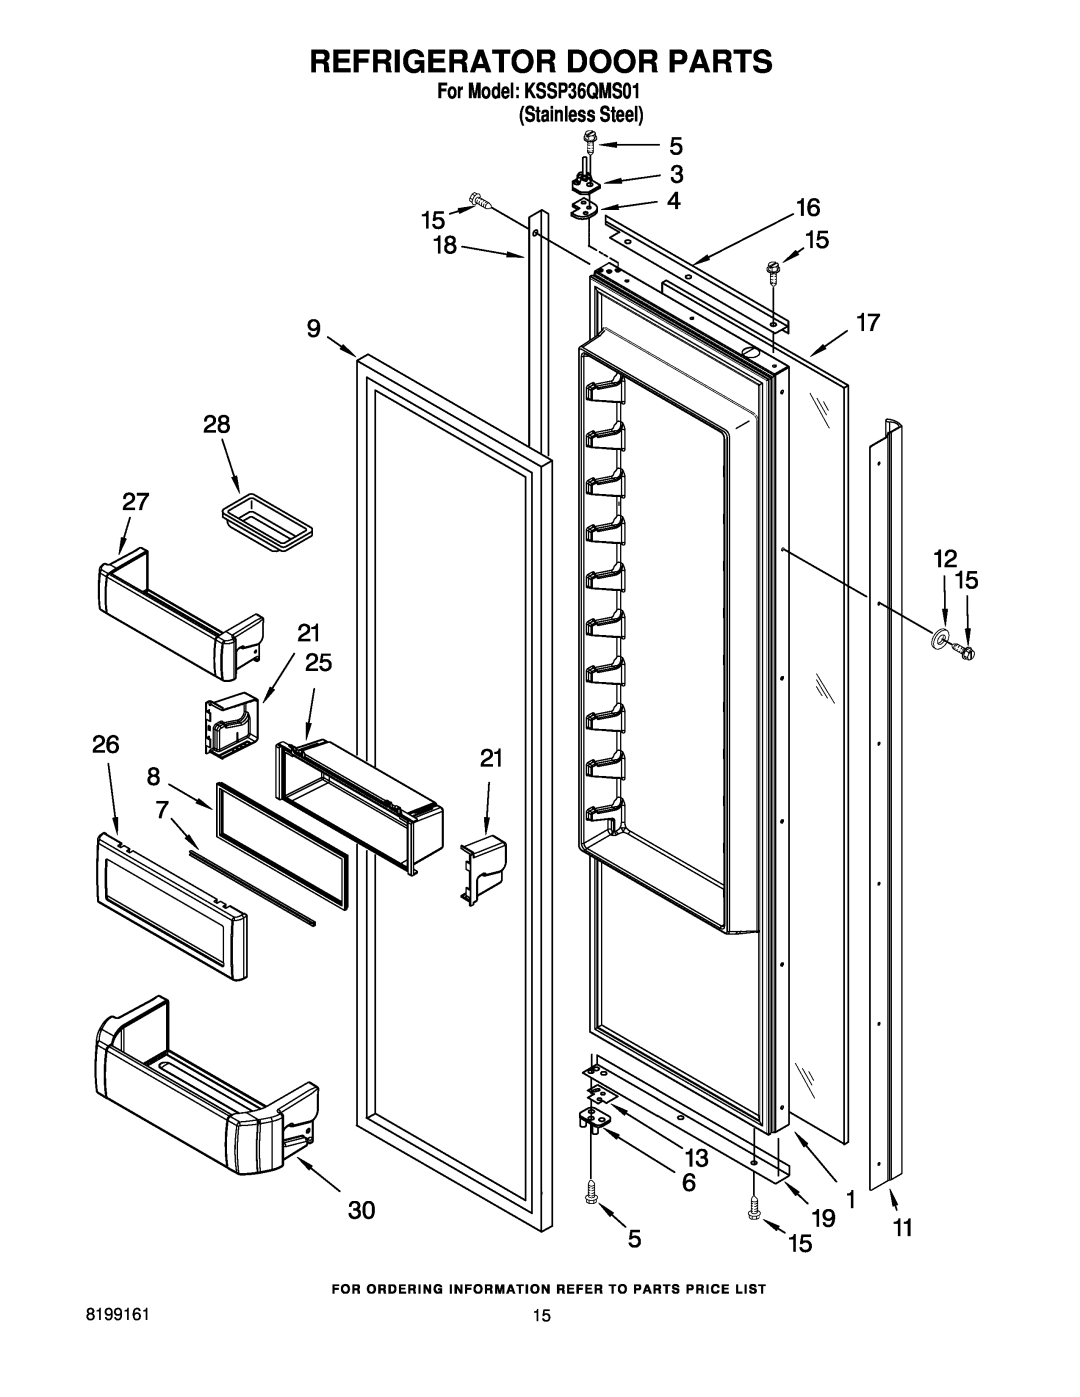 KitchenAid manual Refrigerator Door Parts, For Model KSSP36QMS01 Stainless Steel 